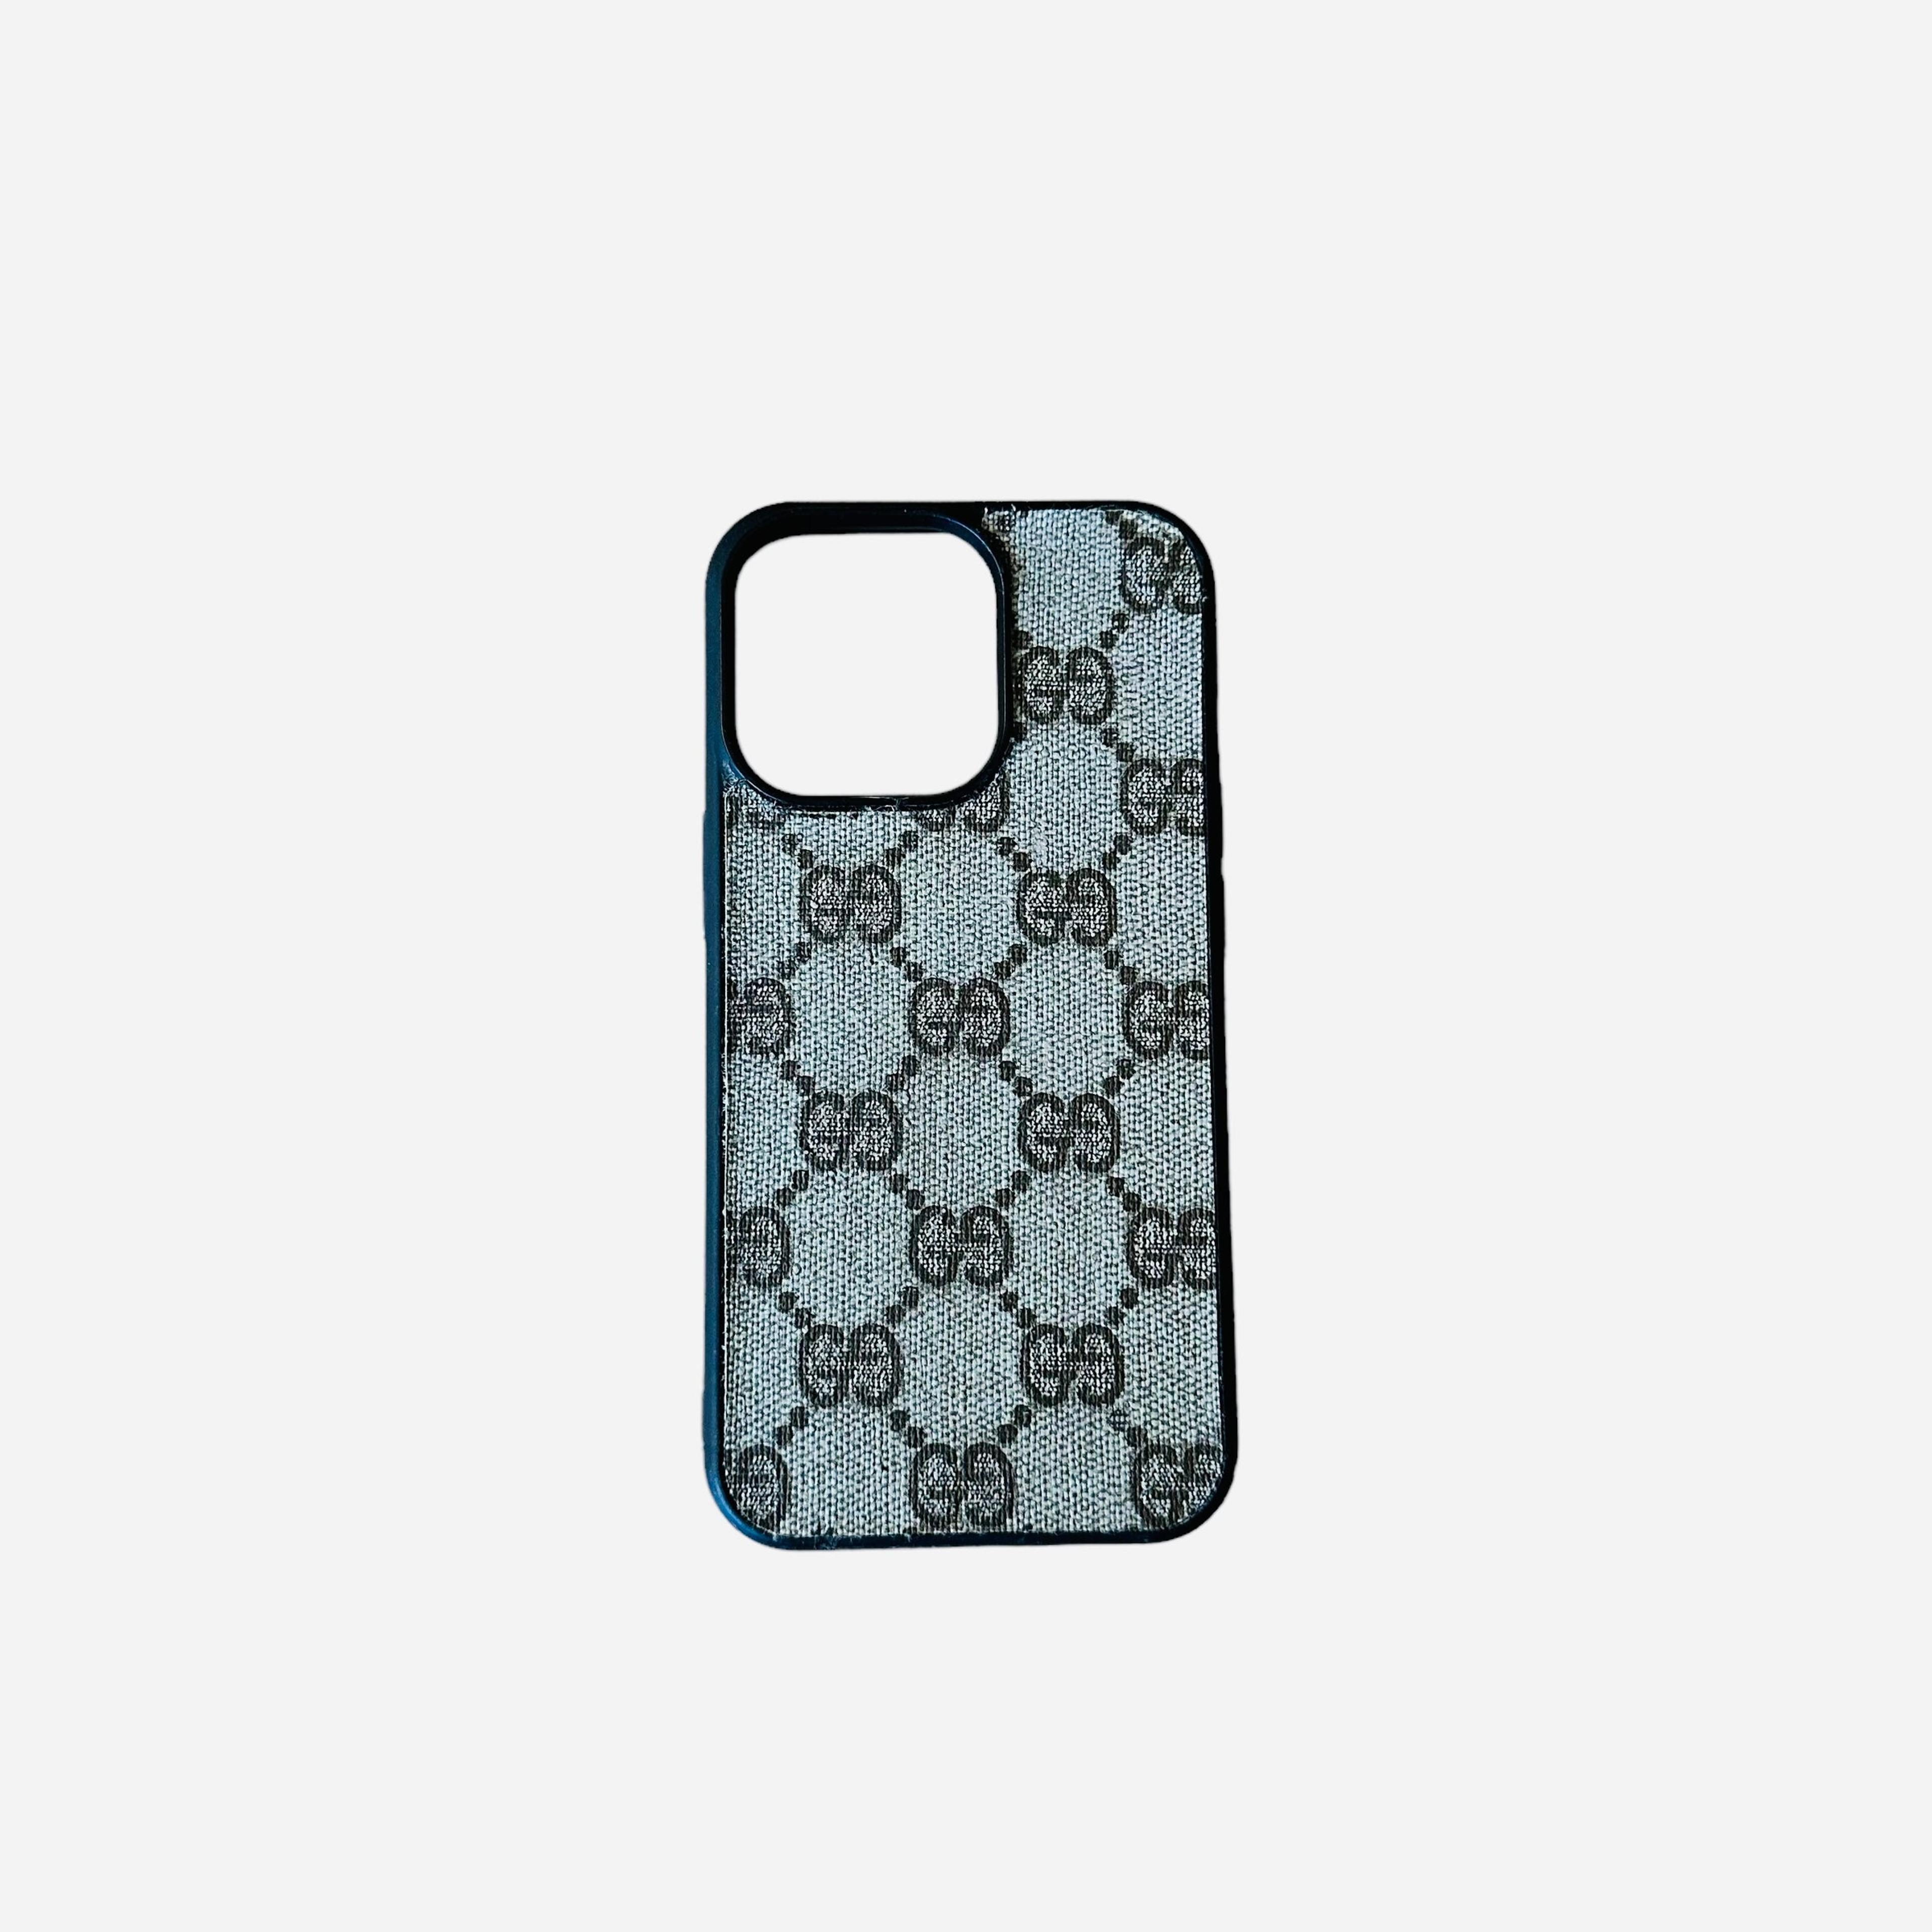 Gucci iPhone Case 13 Pro Max 